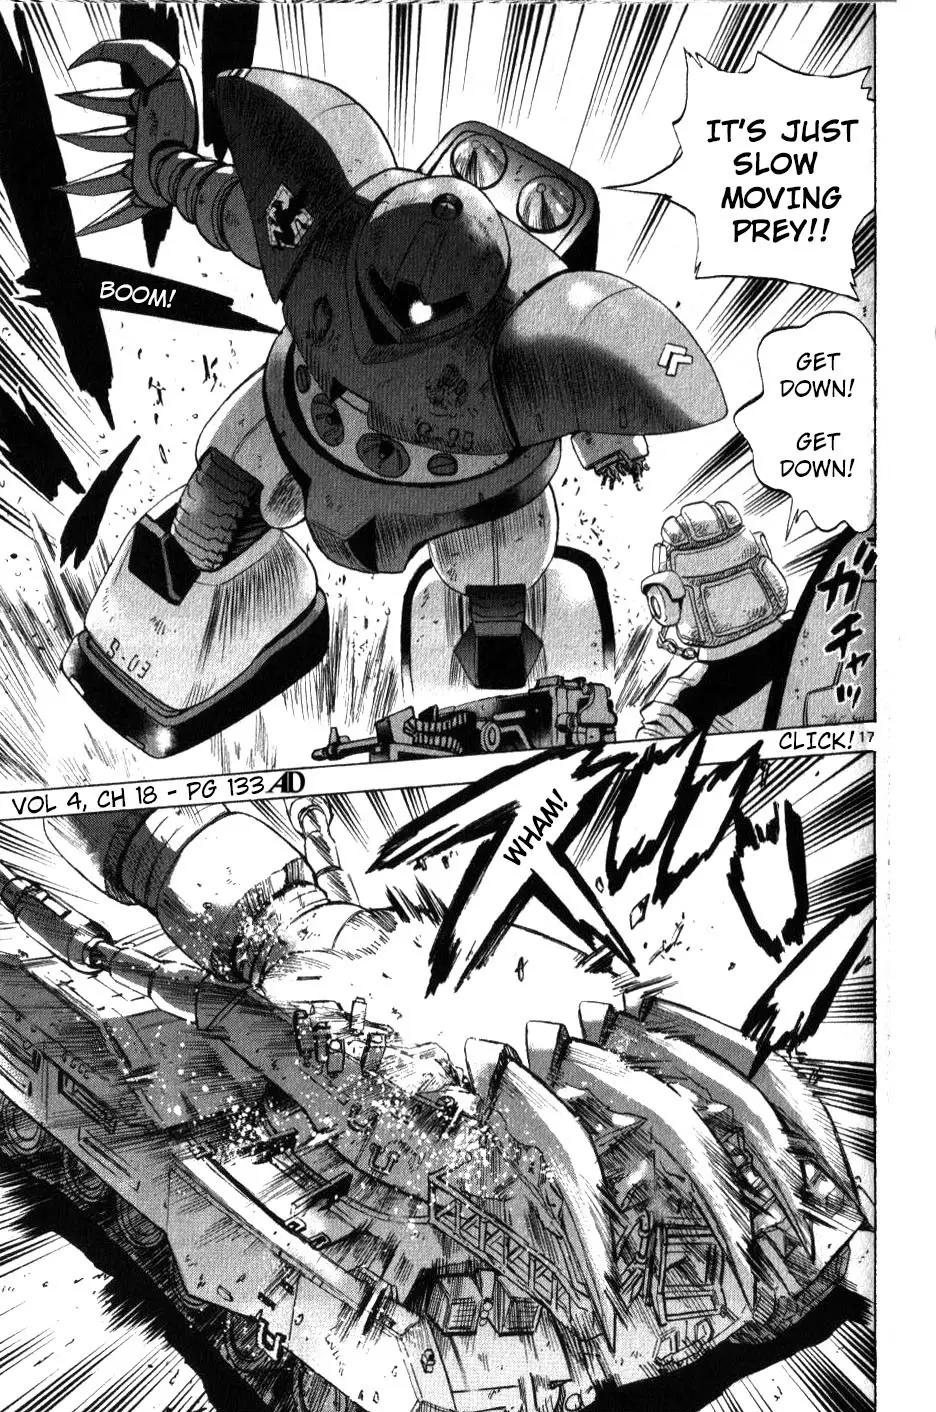 Mobile Suit Gundam Aggressor - 18 page 16-49aaea7a